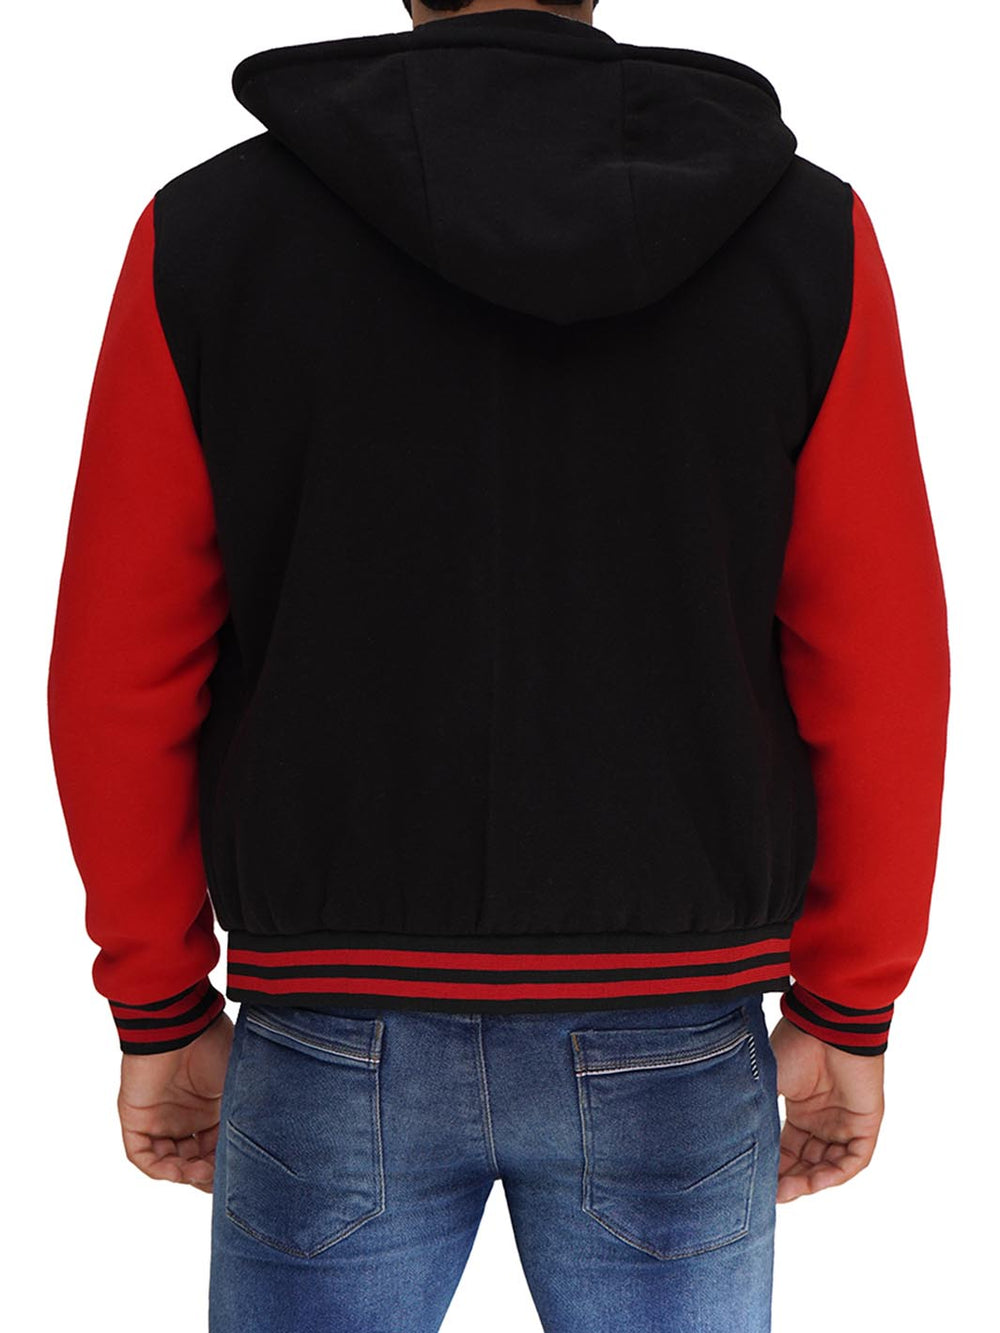 Men's Red and Black Hooded Lettermen Jacket